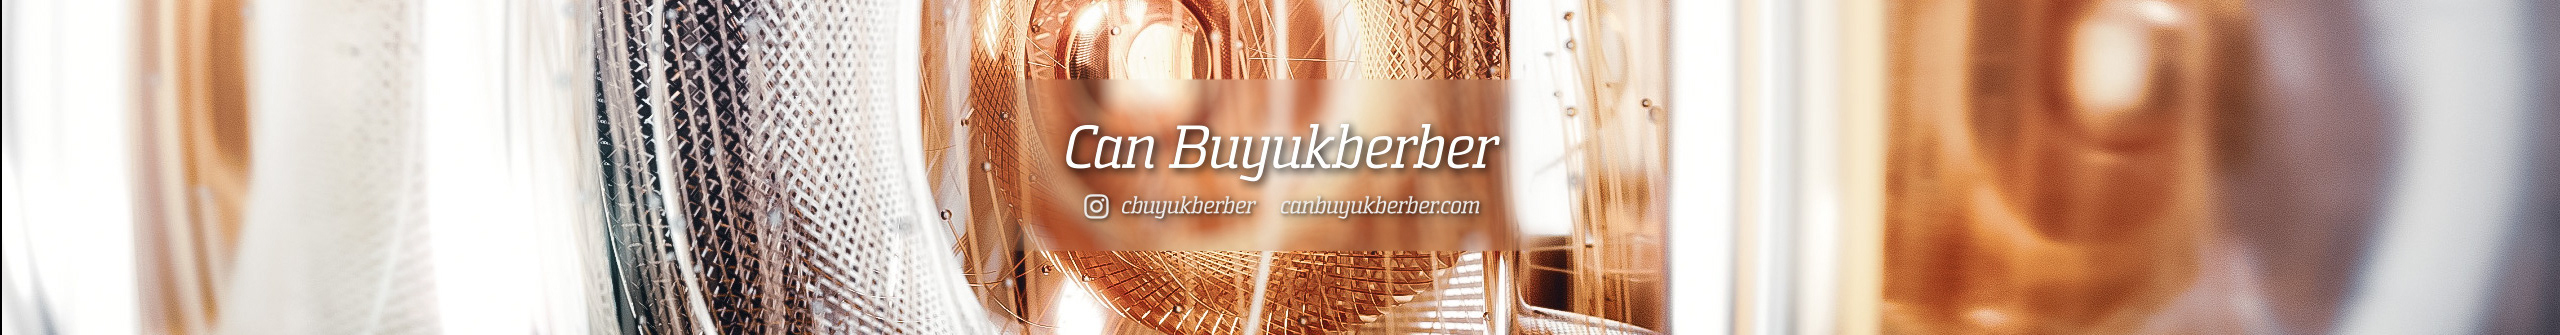 Can Buyukberber's profile banner